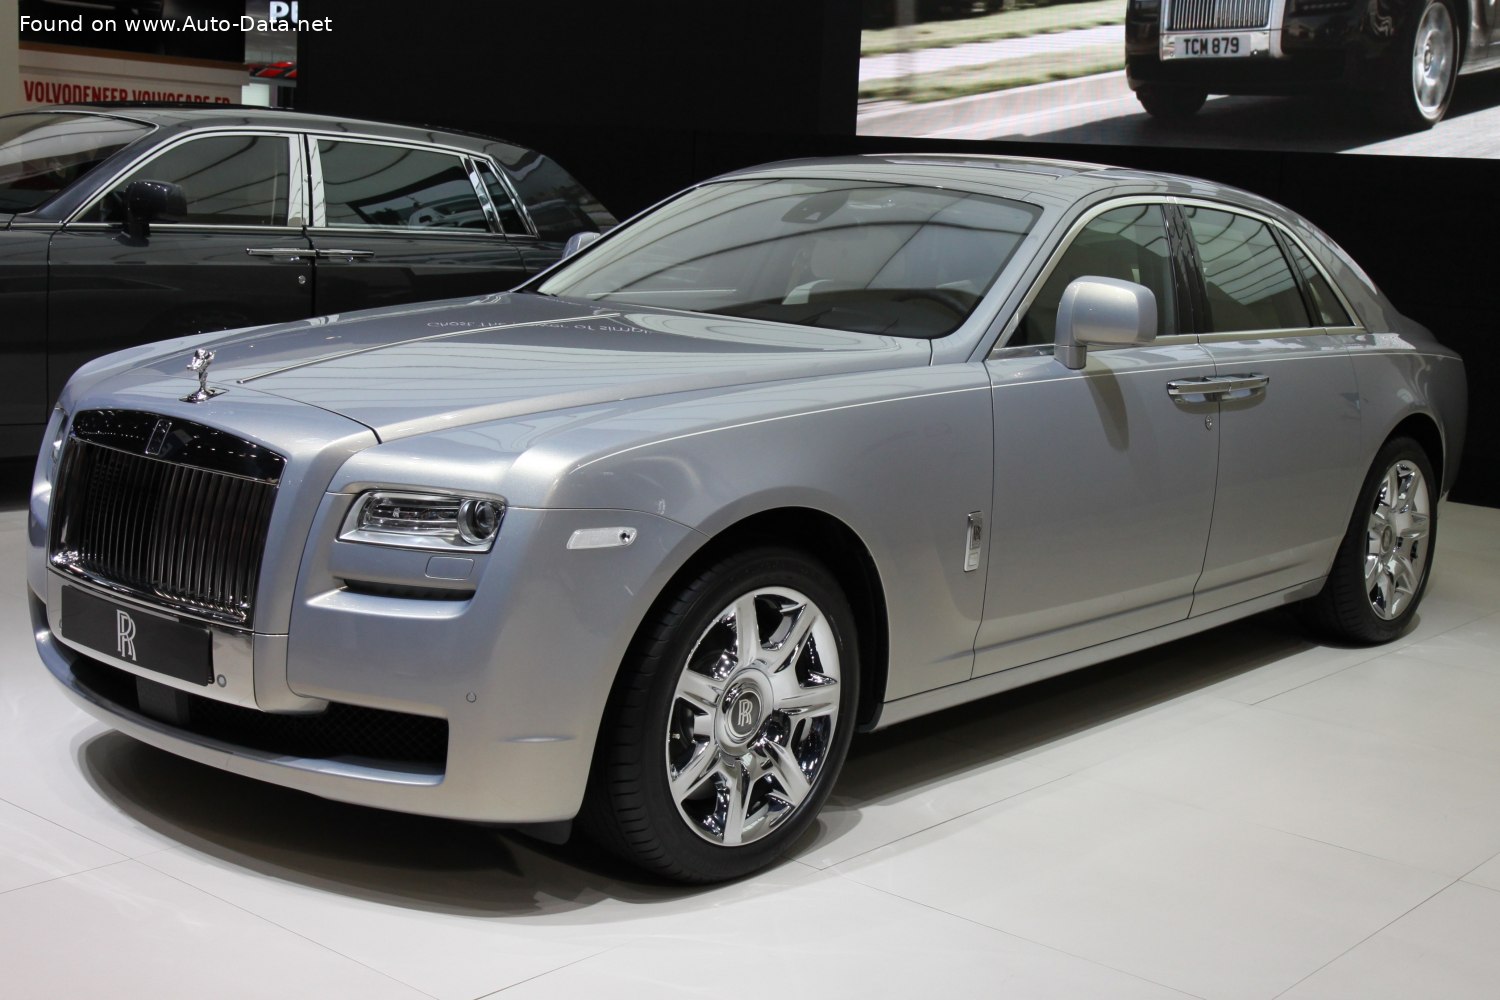 2010 Rolls-Royce Ghost I | Technical Specs, Fuel consumption, Dimensions